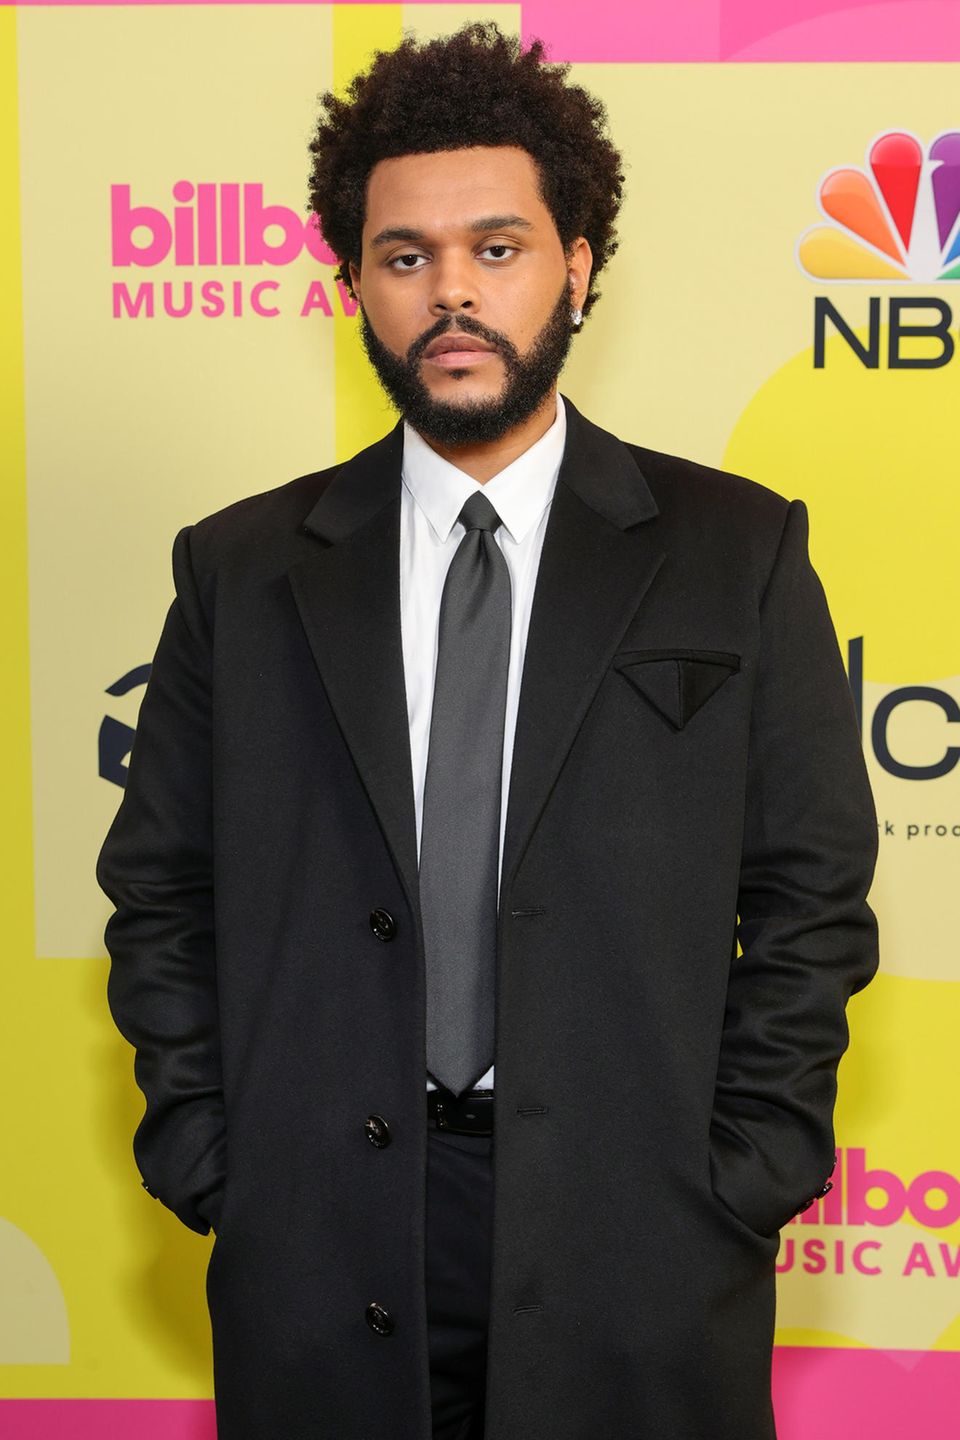 The Weeknd - Starporträt, News, Bilder